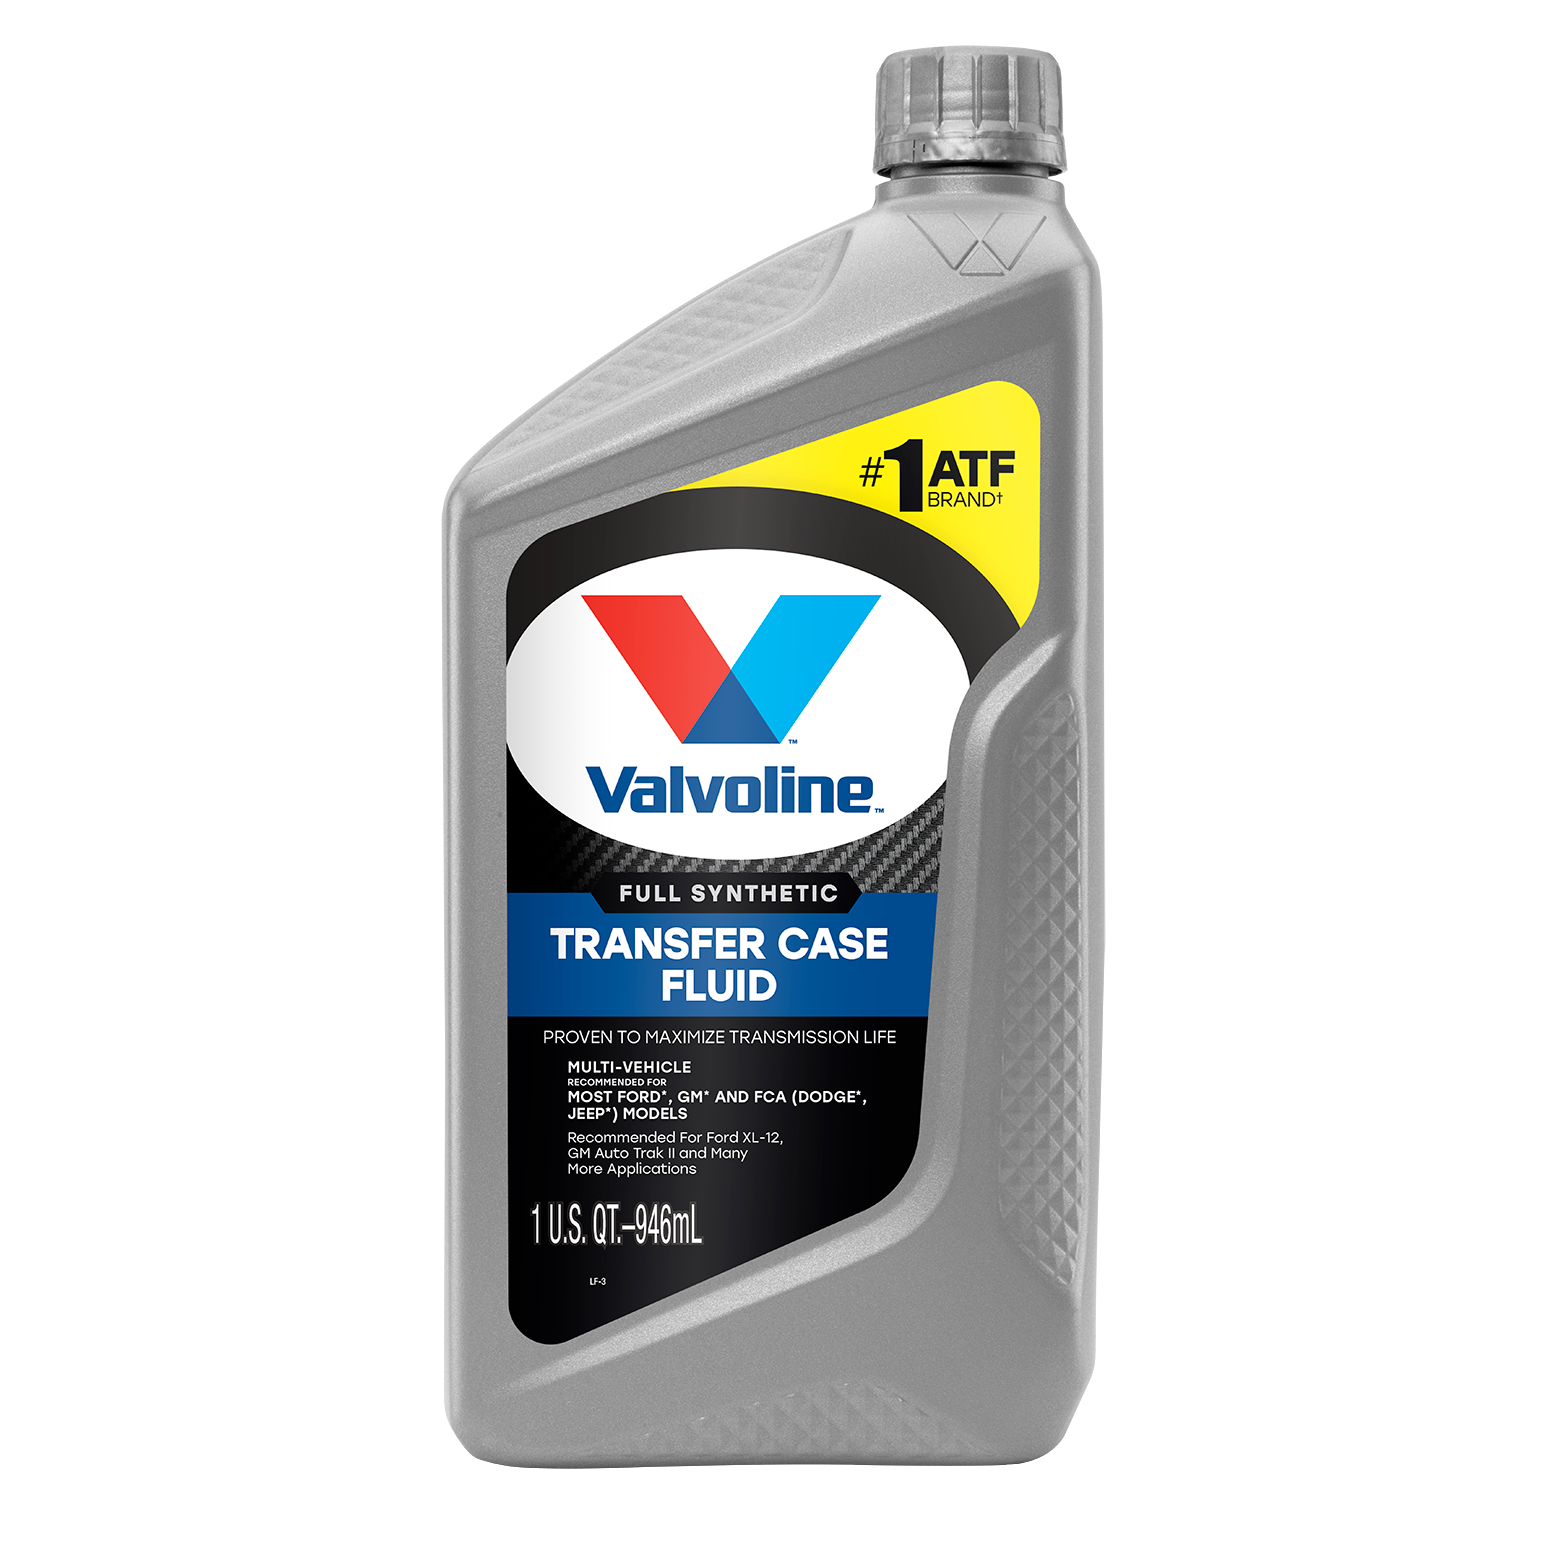  Valvoline DEXRON VI/MERCON LV (ATF) Full Synthetic Automatic Transmission  Fluid 1 QT, Case of 6 : Automotive